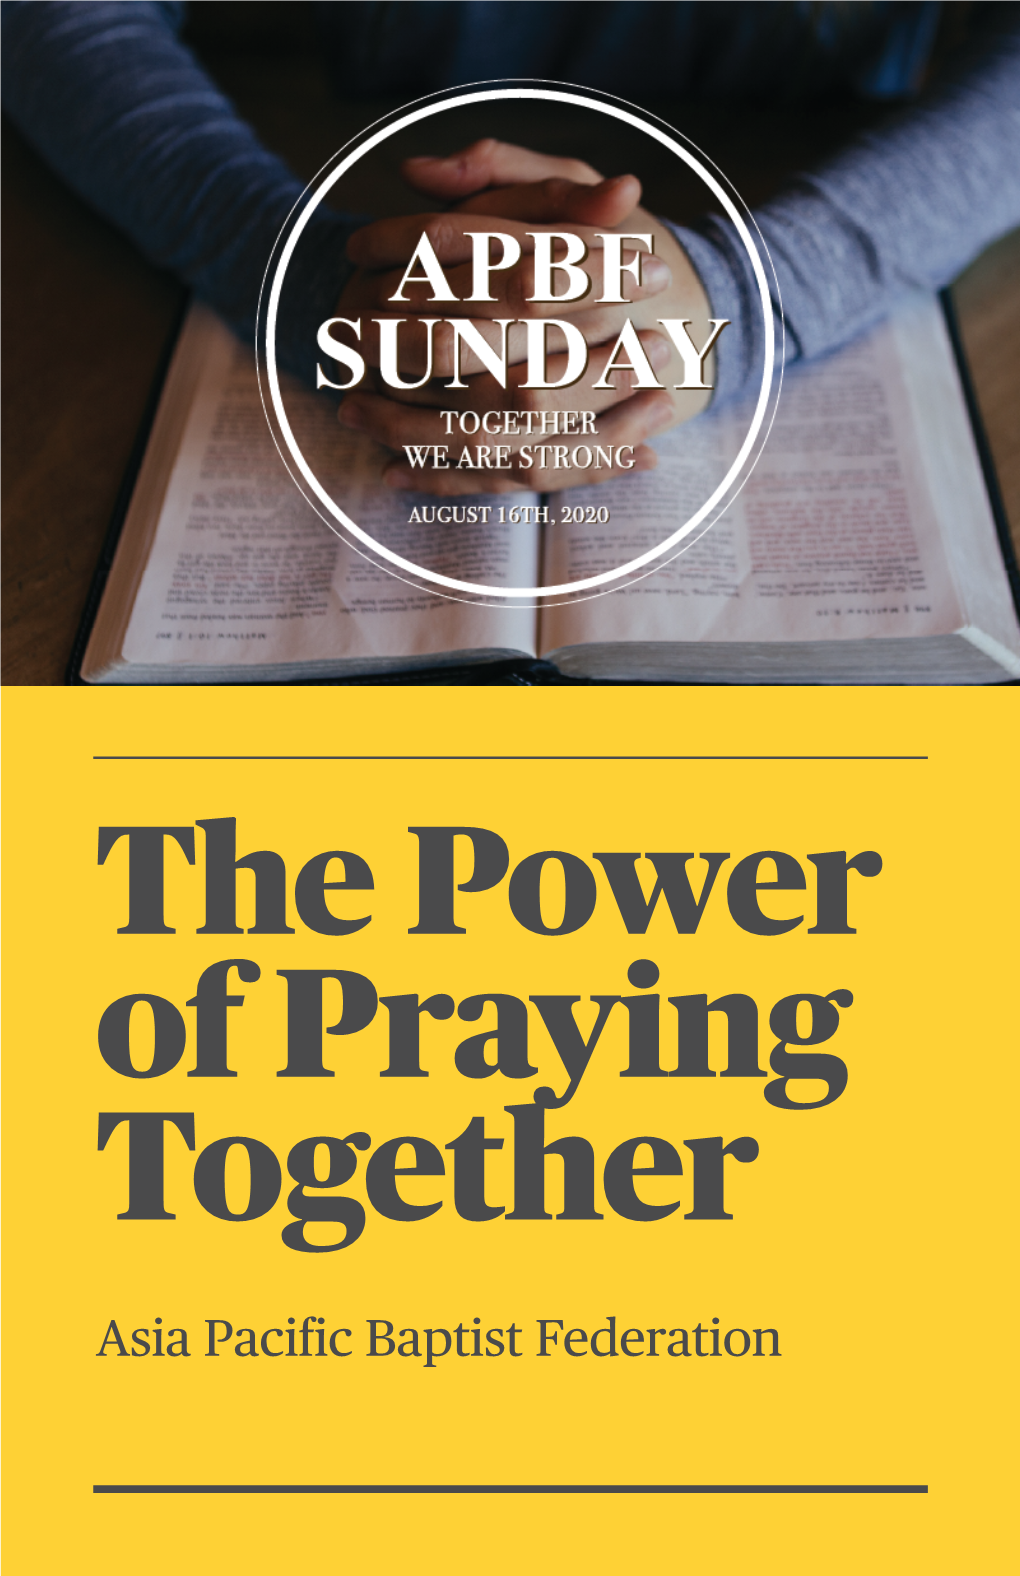 APBF Sunday Power of Praying Together, 2020